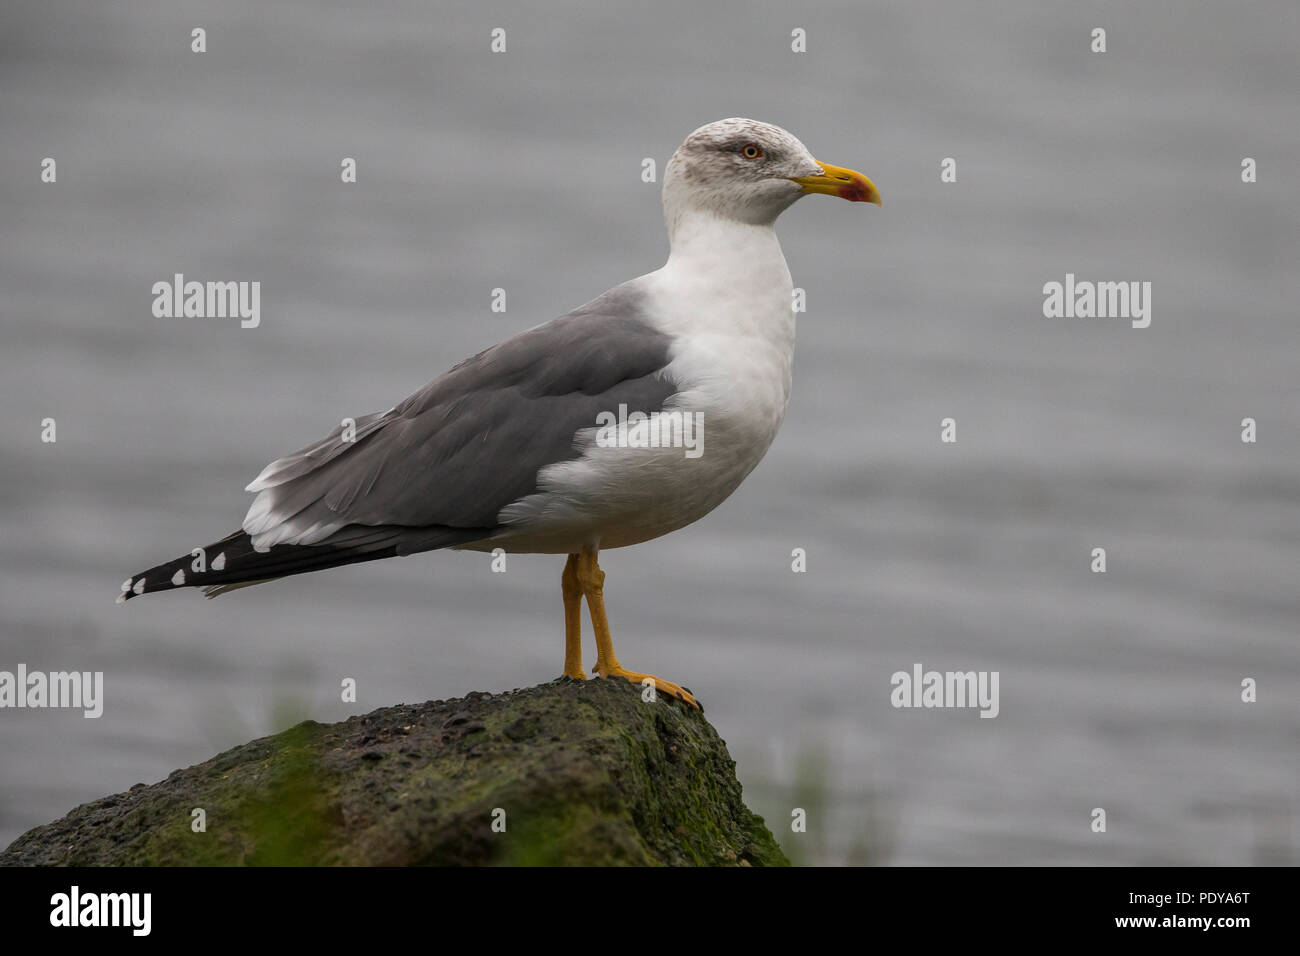 Yellow-legged gull; Atlantic gull; Larus michahellis atlantis Stock Photo